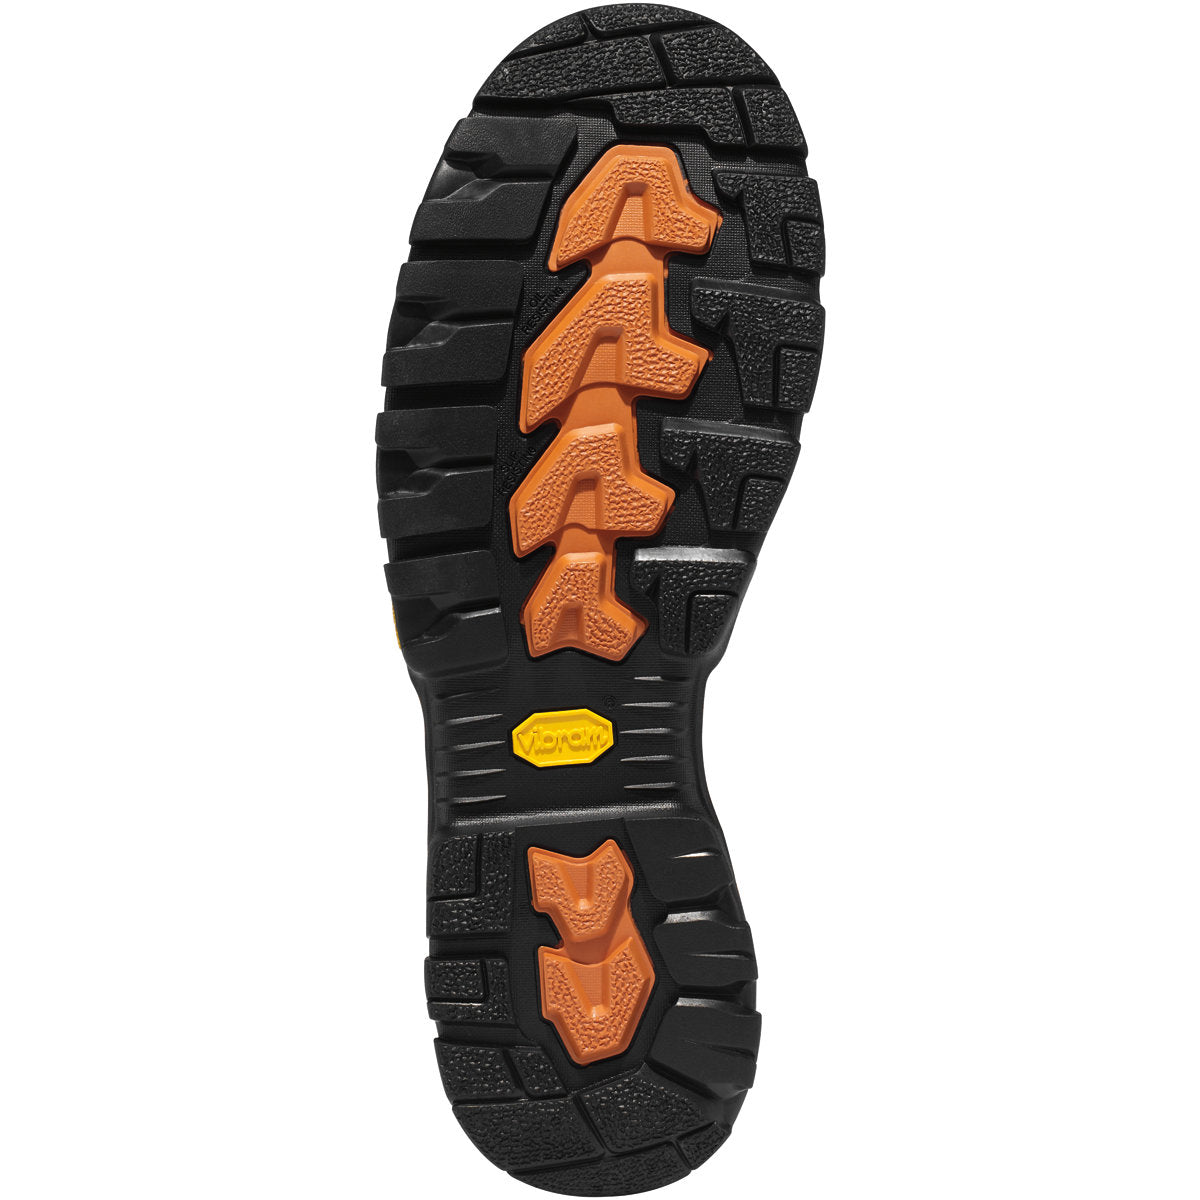 Danner Men's Vicious 8-inch Composite Toe Work Boot